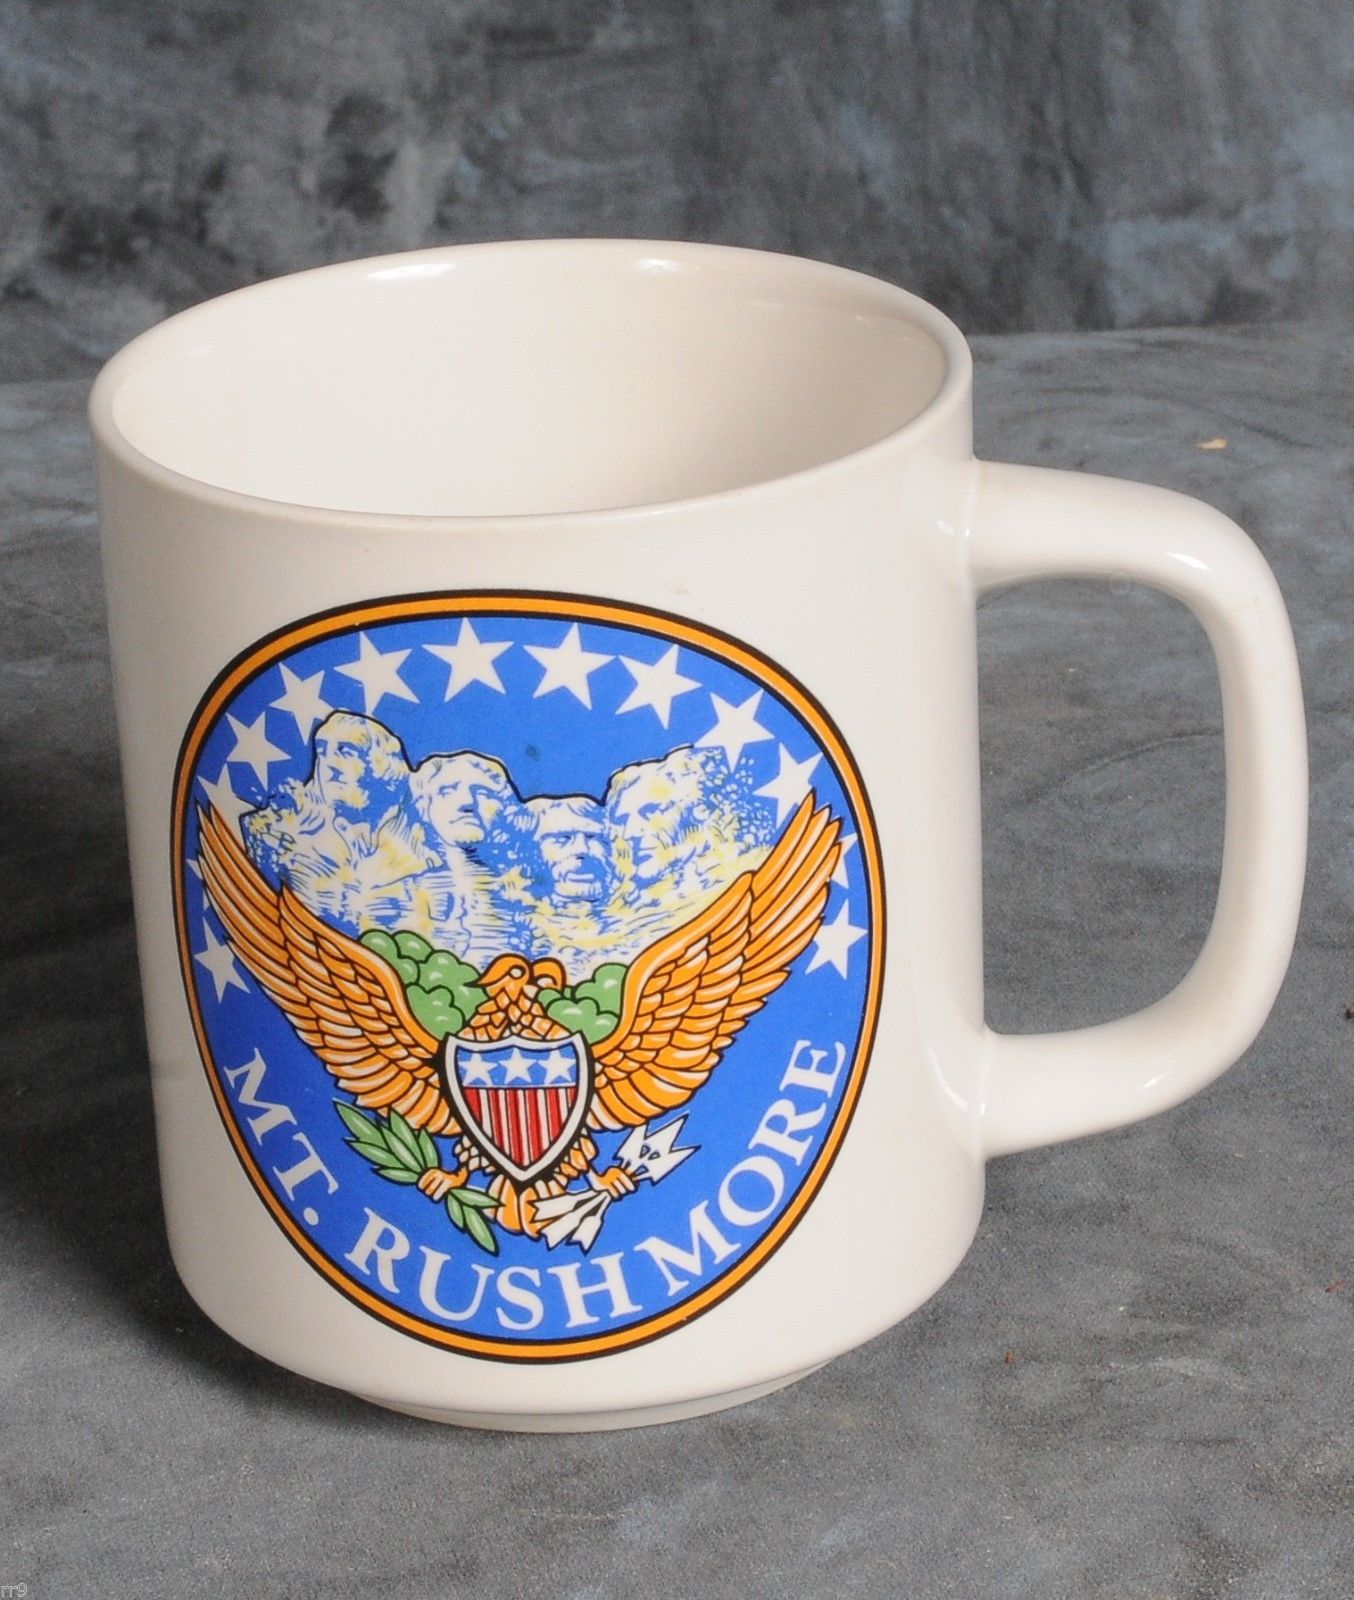 Mount Rushmore USA Presidents Americana Coffee Mug - $2.50